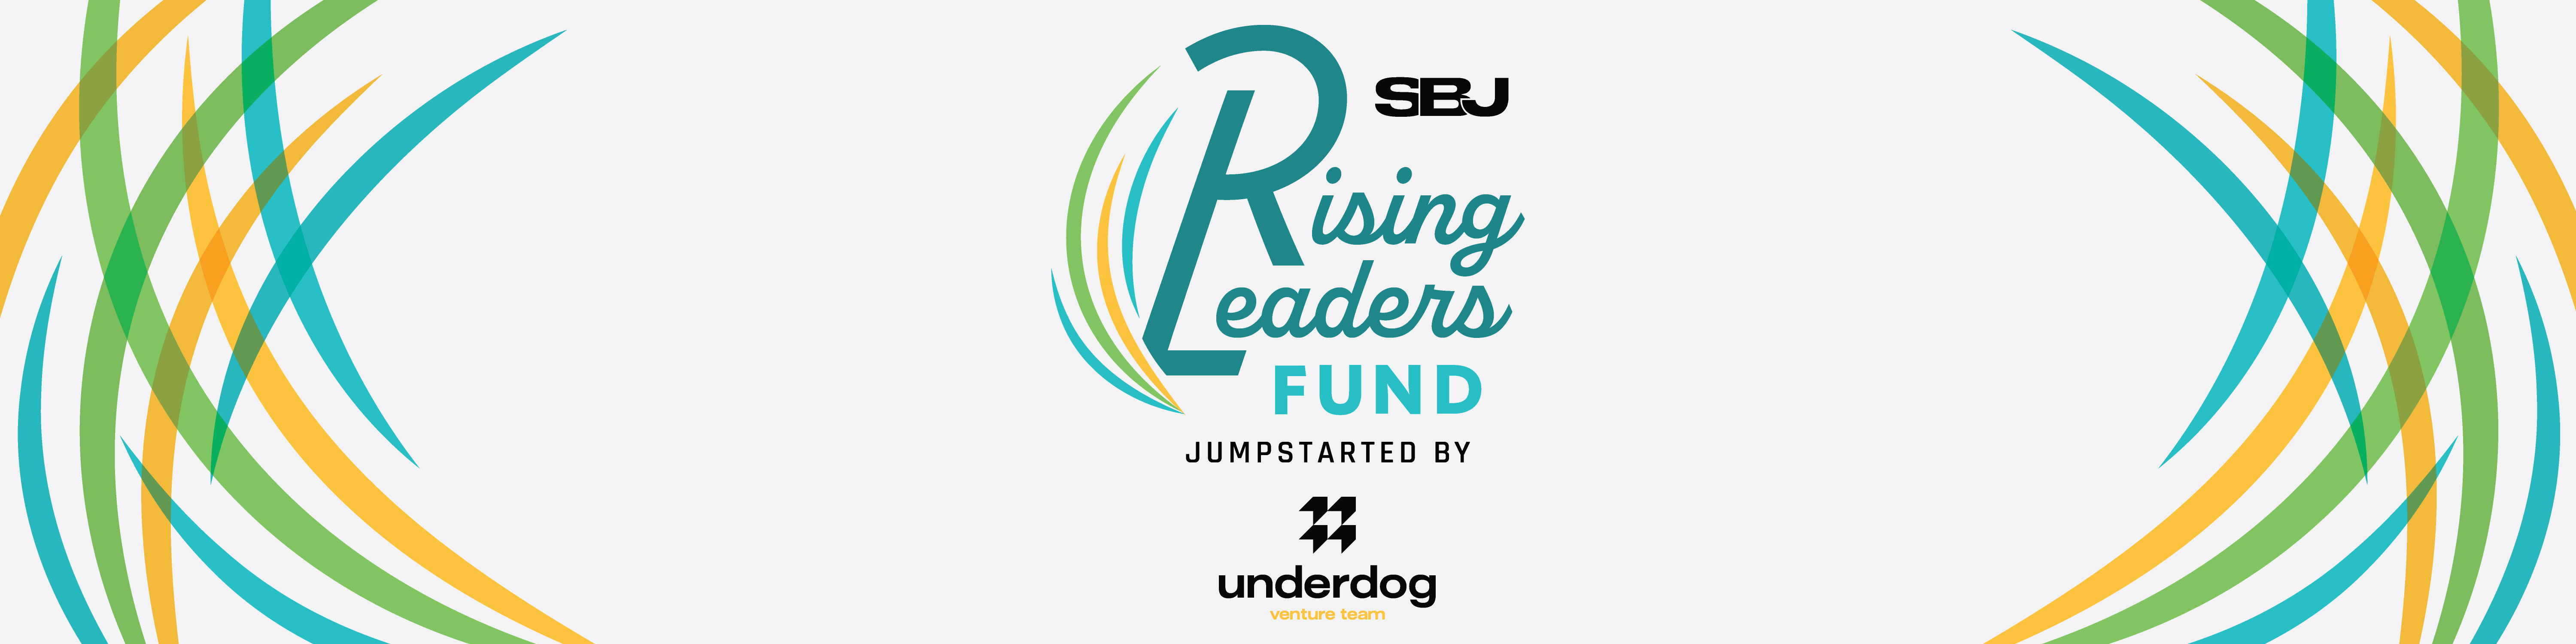 Rising Leaders Fund